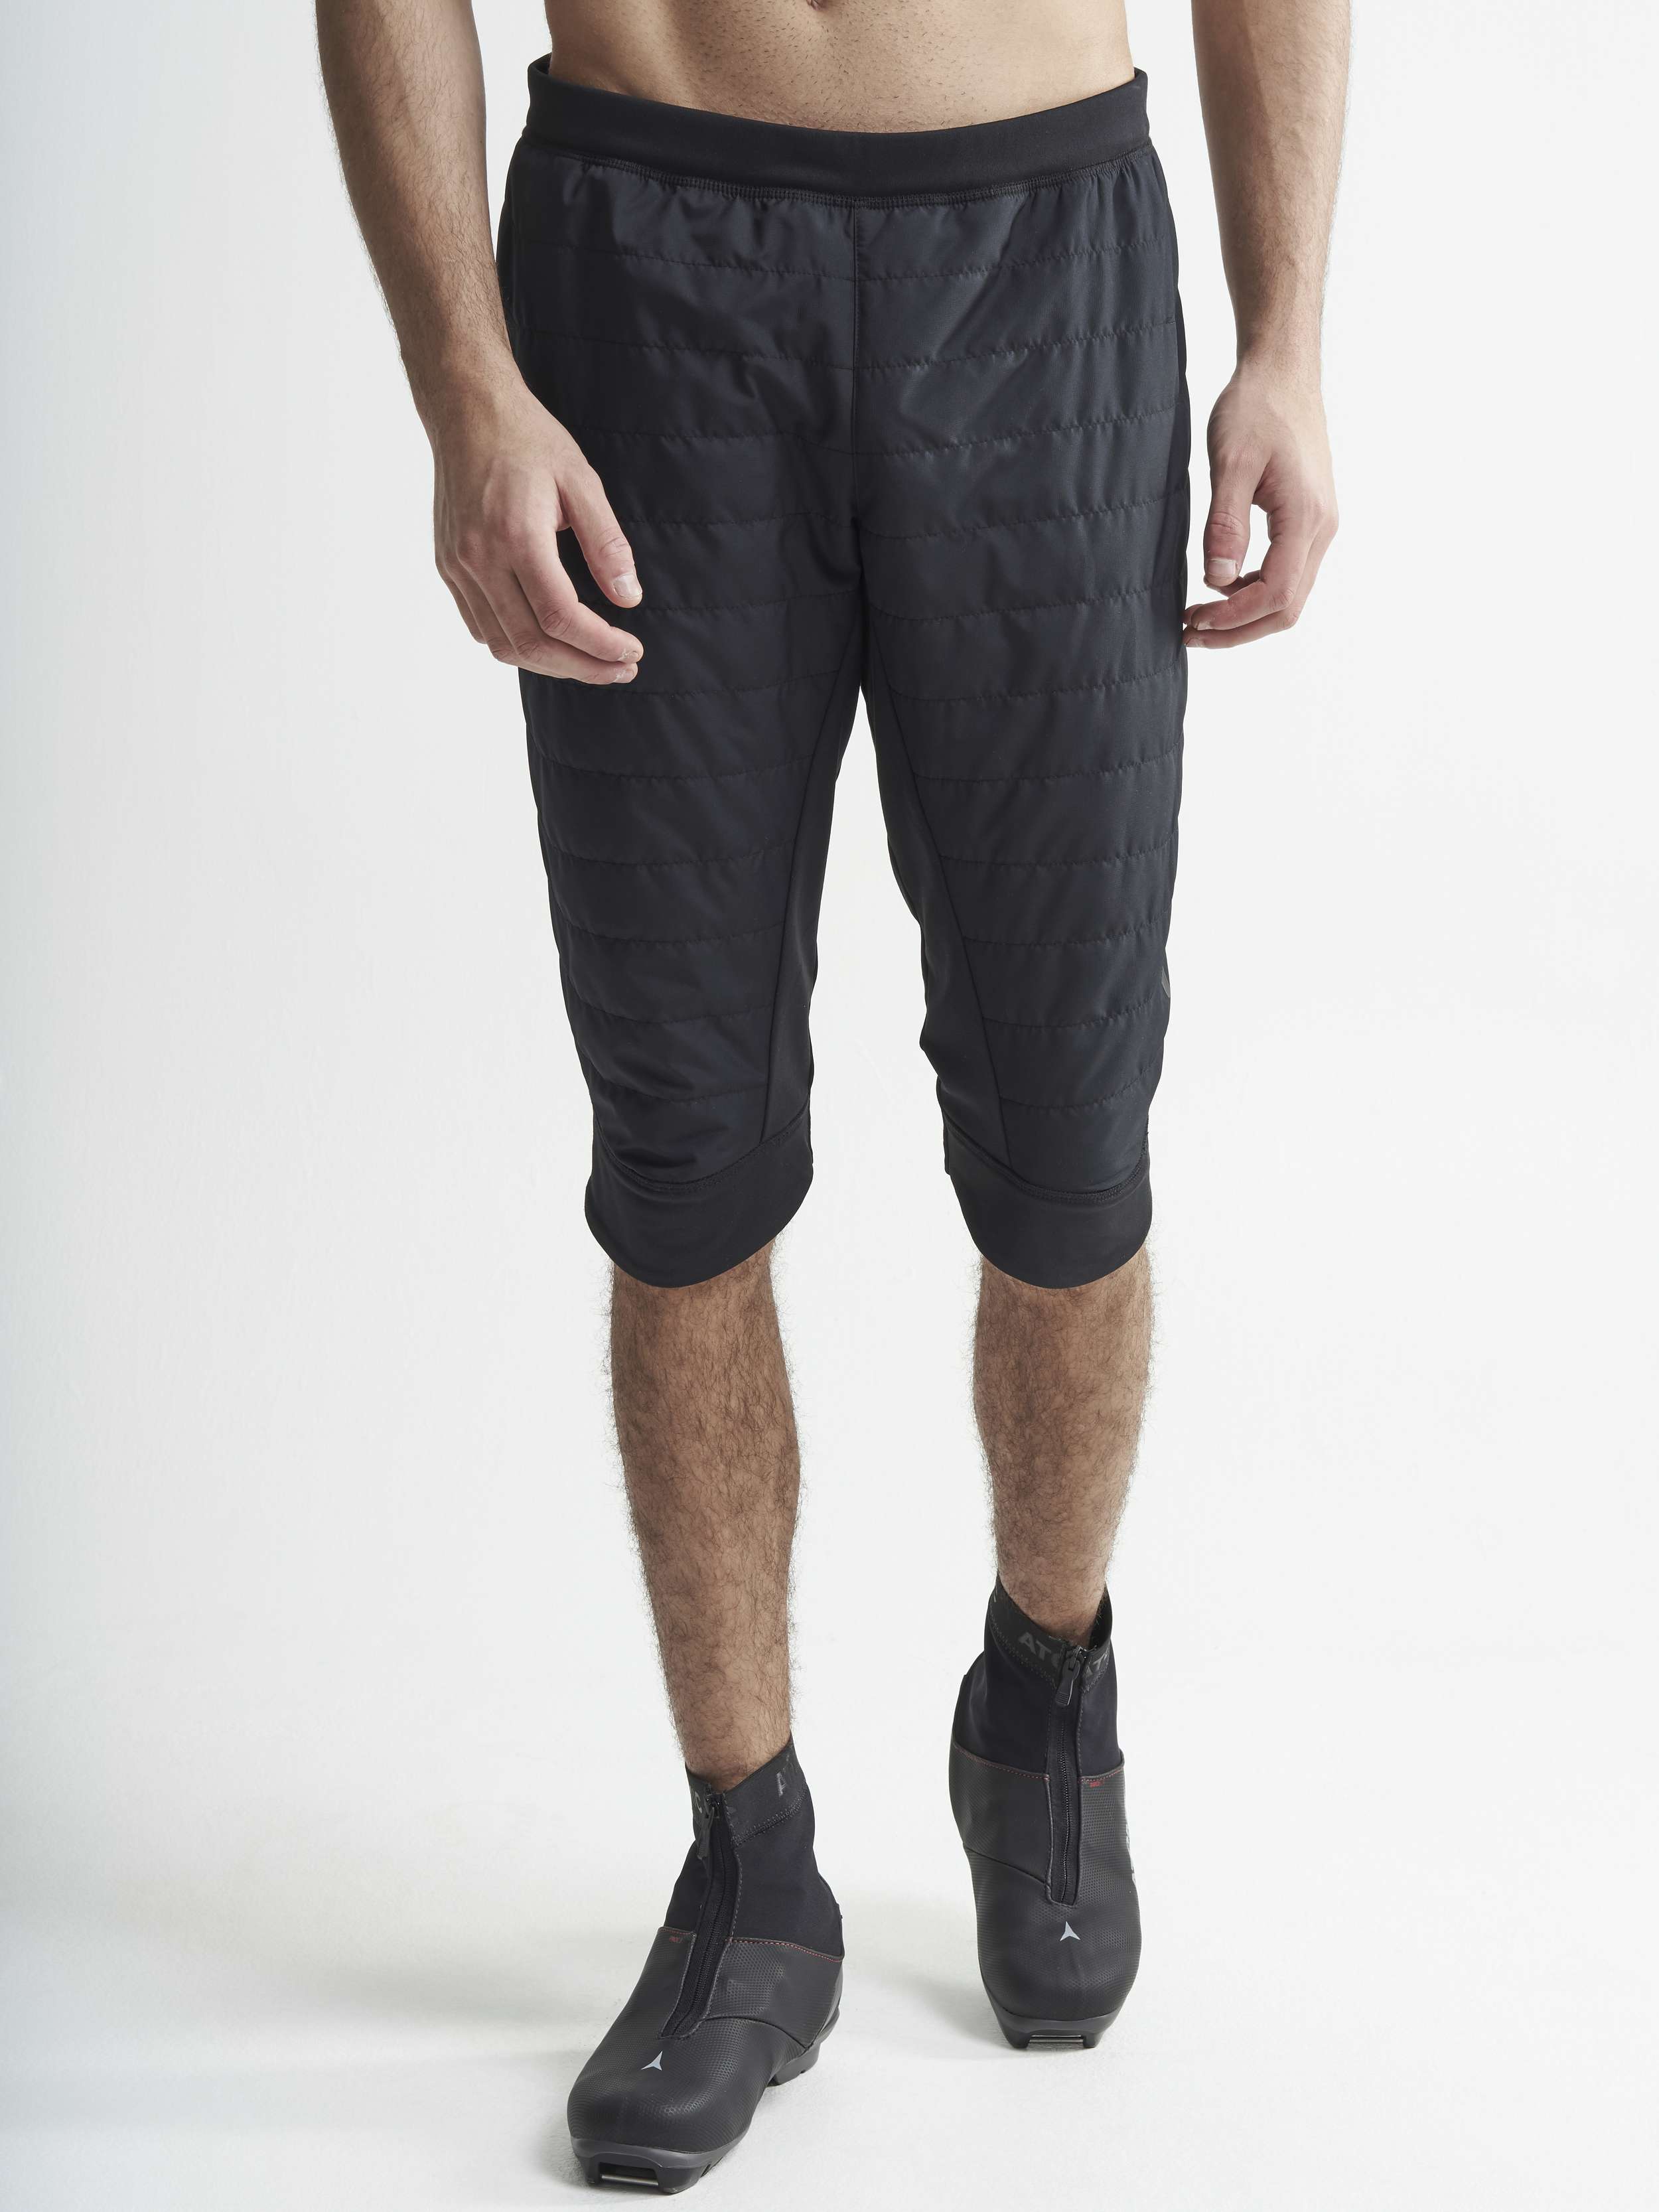 Storm Thermal Shorts - Craft Black Sportswear M 